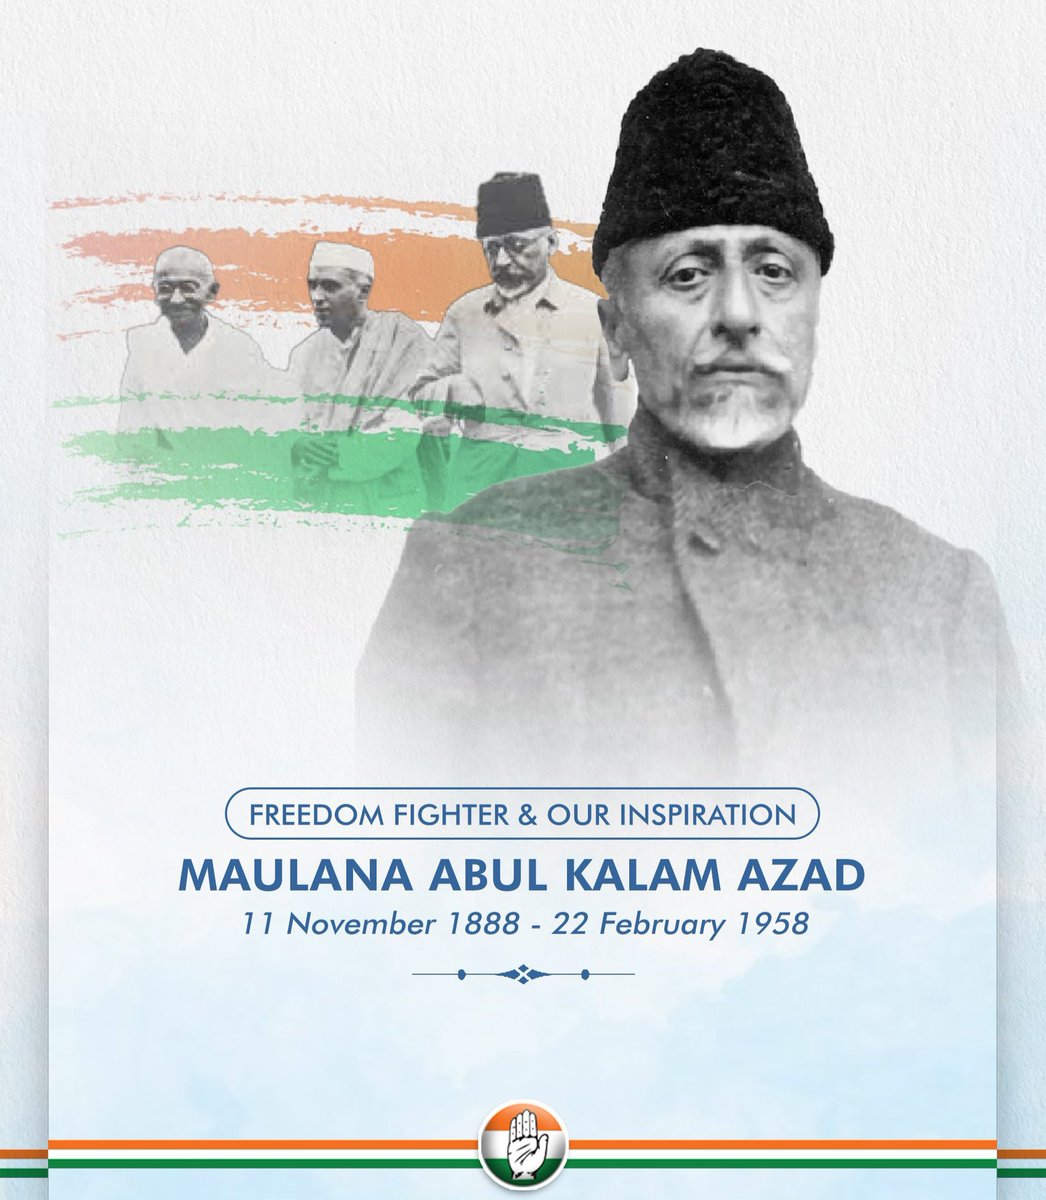 Father of Indian Education system Maulana Abul Kalam Azad, the voice that will continue inspire millions. #MaulanaAbulKalamAzad